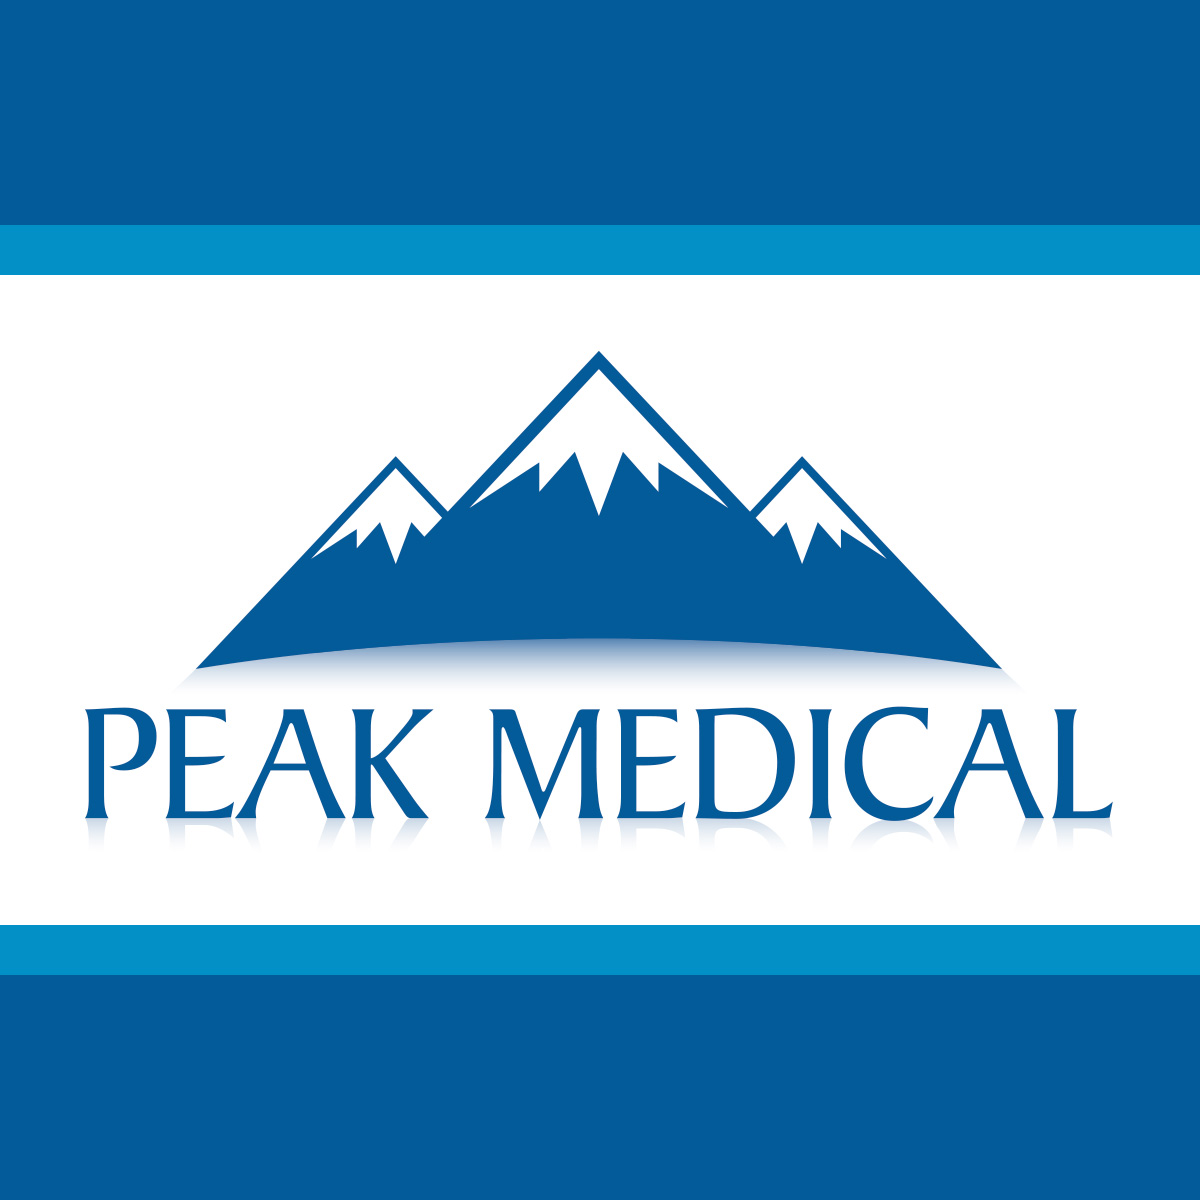 Peak Medical Products Inc